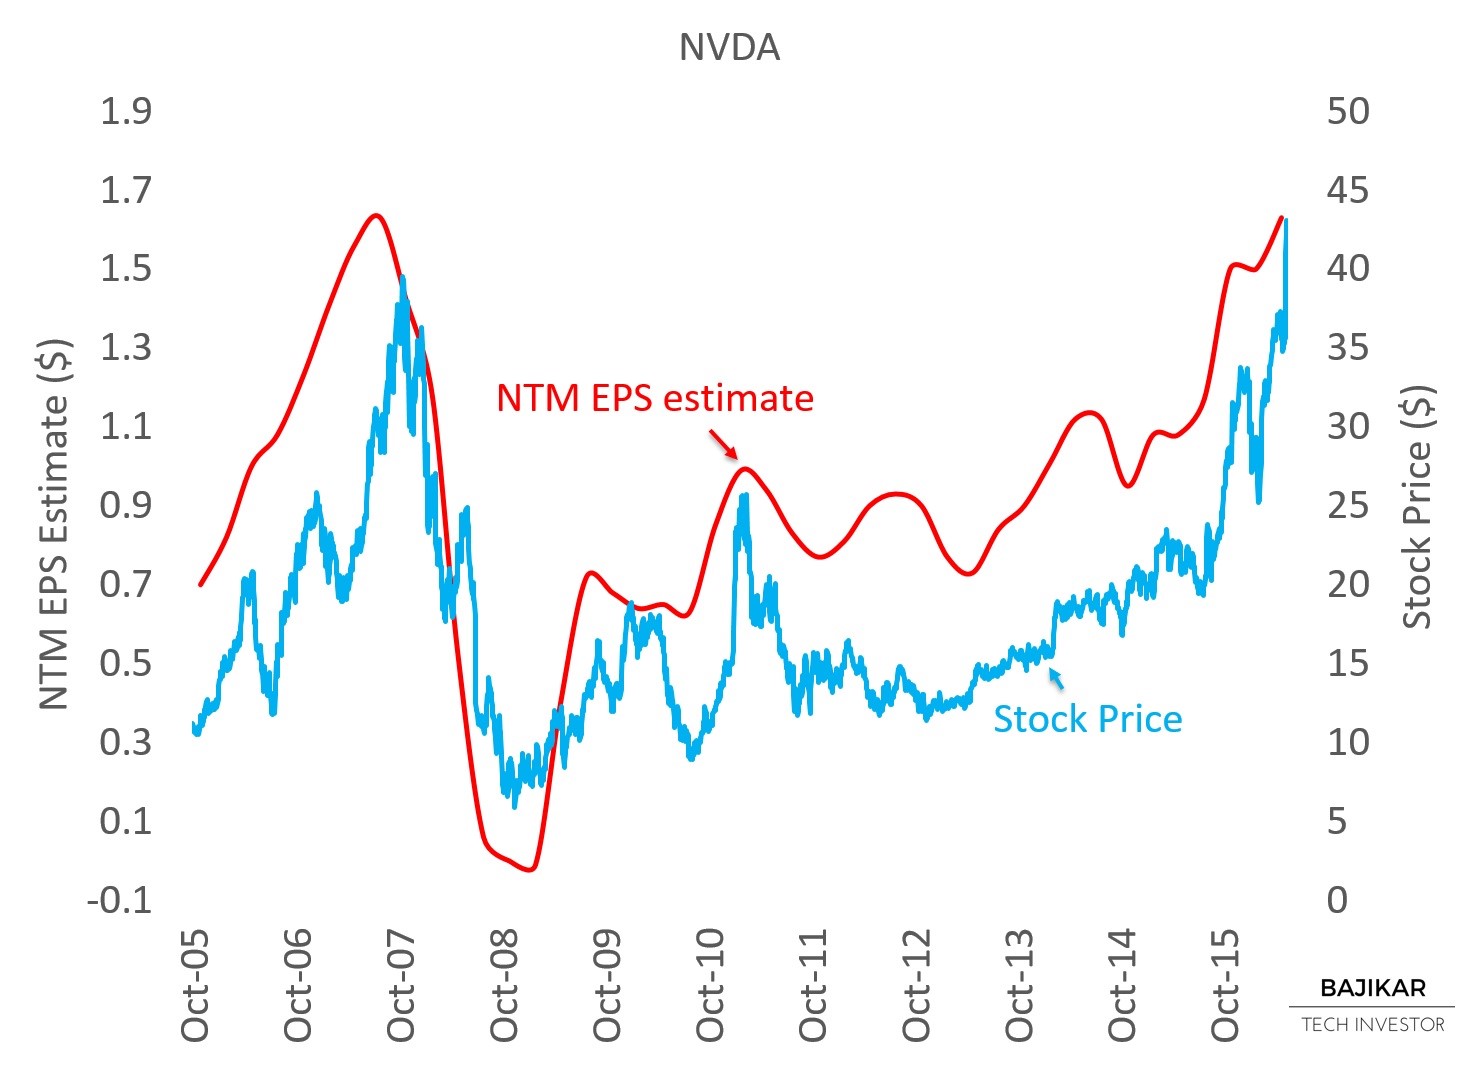 NVDA stock vs. NTM EPS estimates